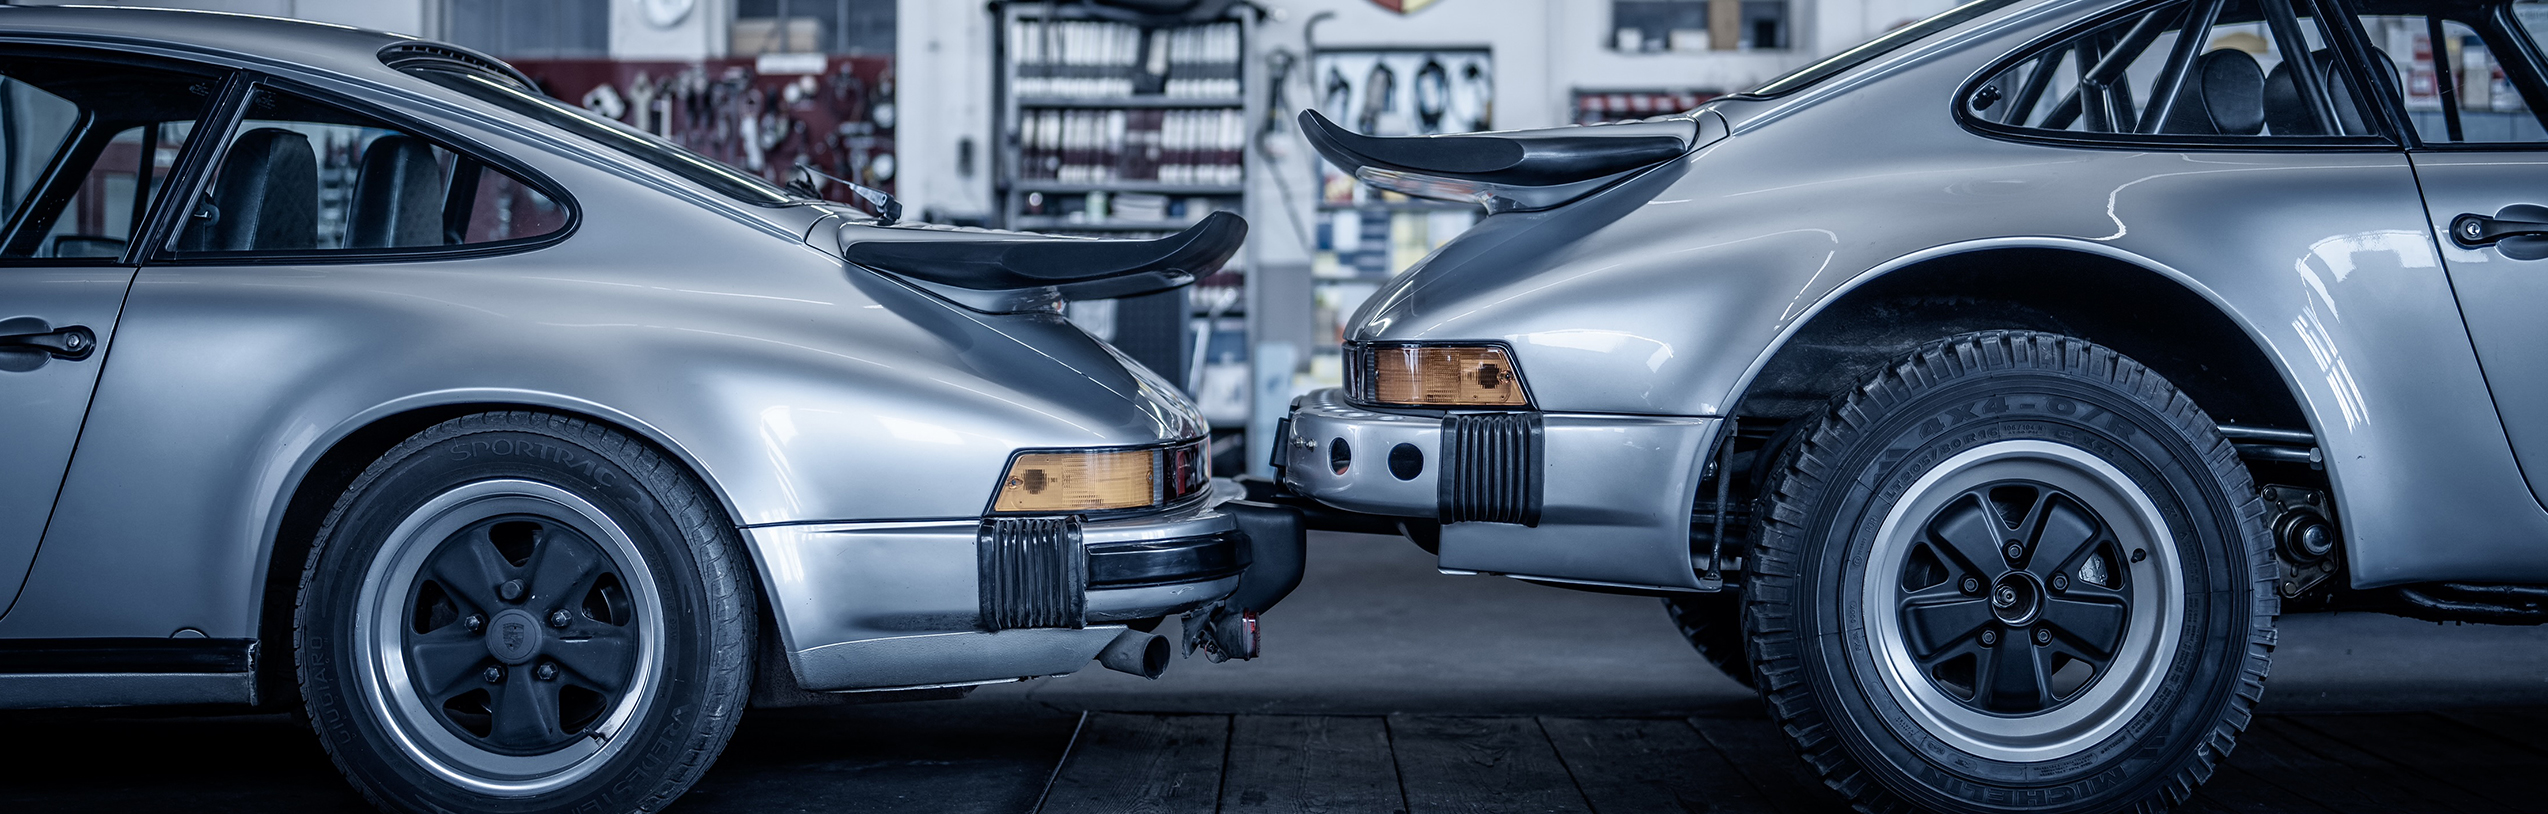 Porsche Classic OEM-Teile, Reproduktionen, Spezialwerkzeuge